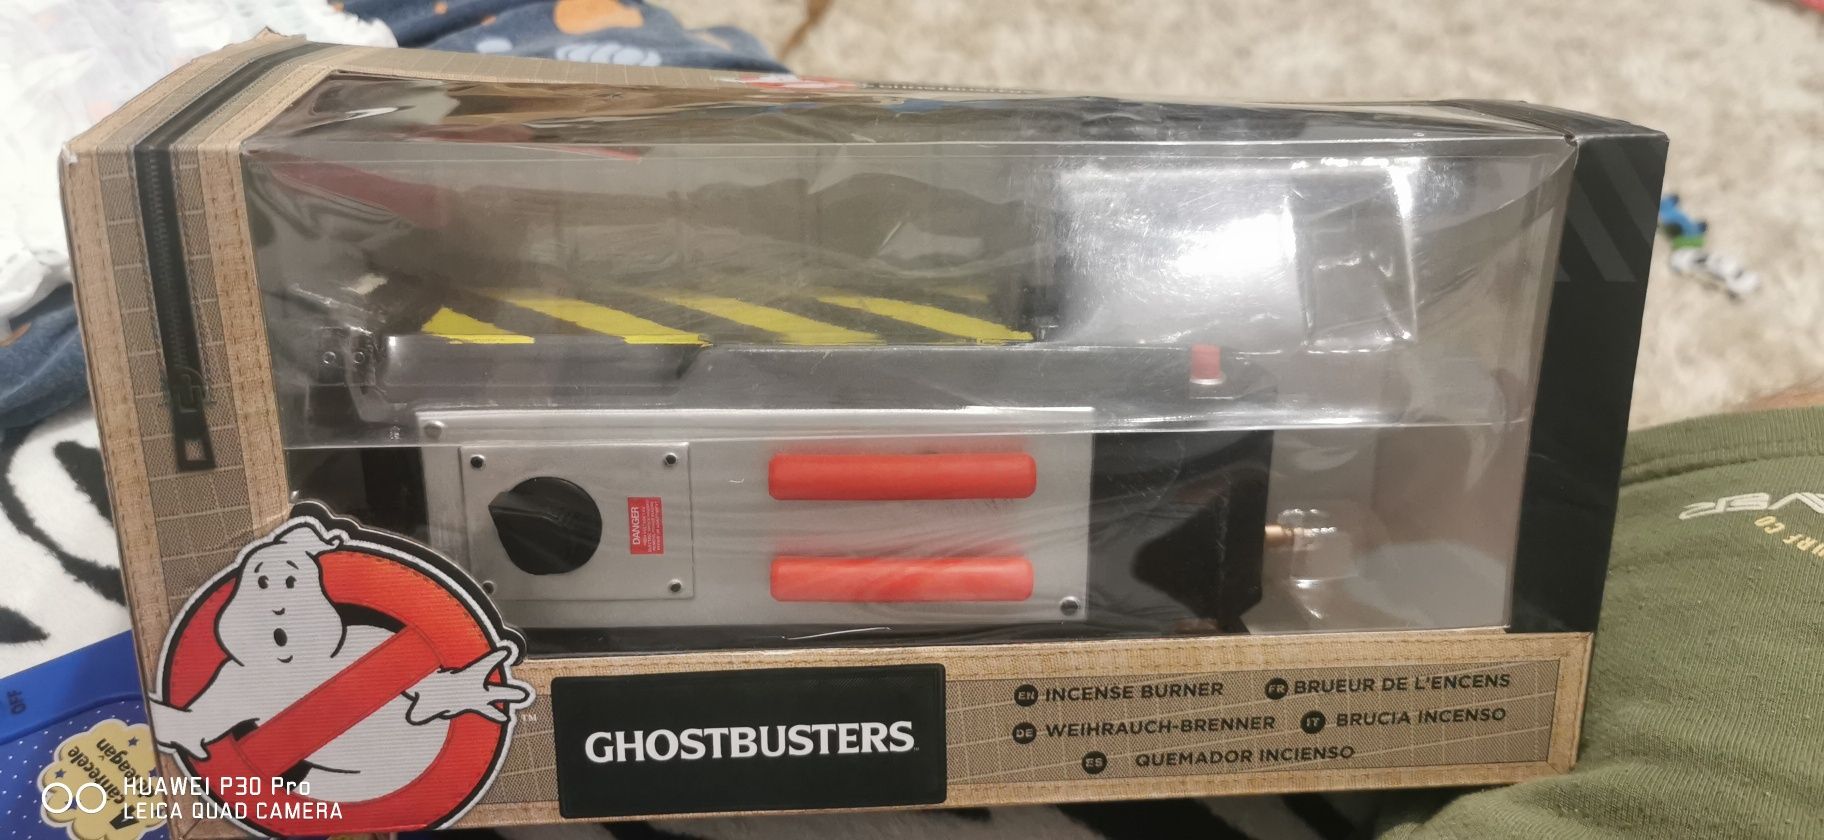 Ghostbussters   nou